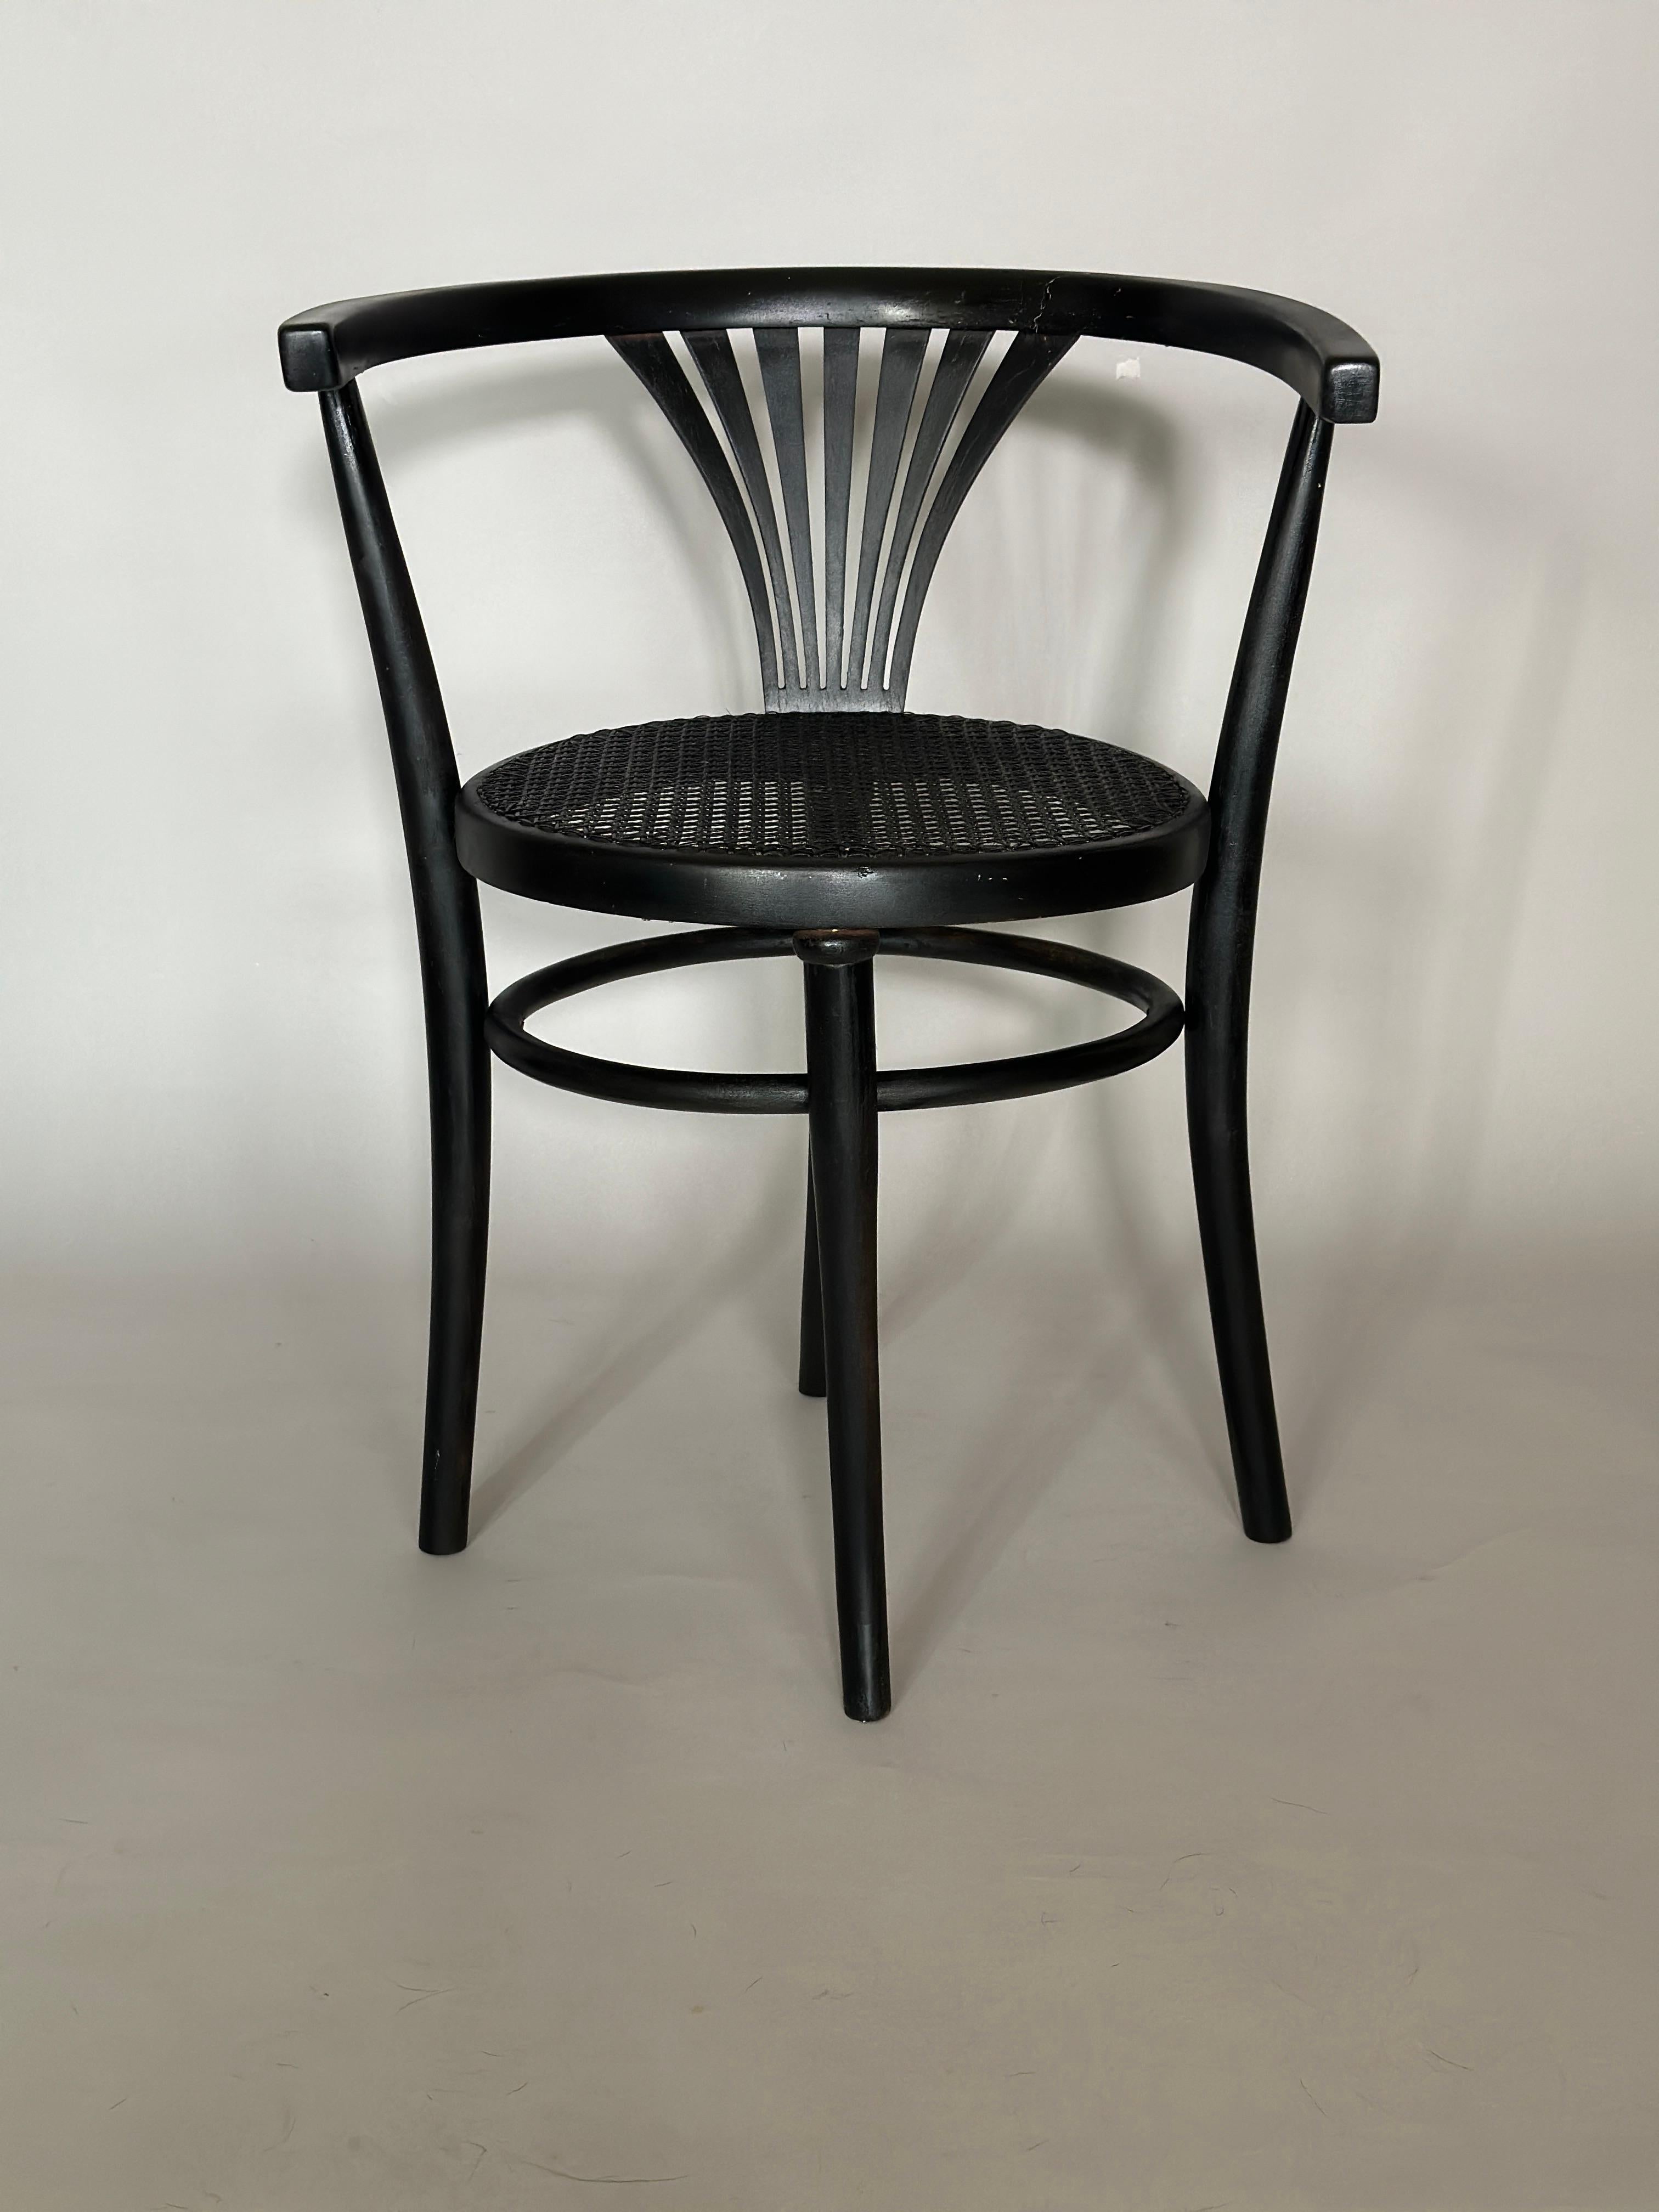 Thonet chair Nr 28 by Josef Hoffmann